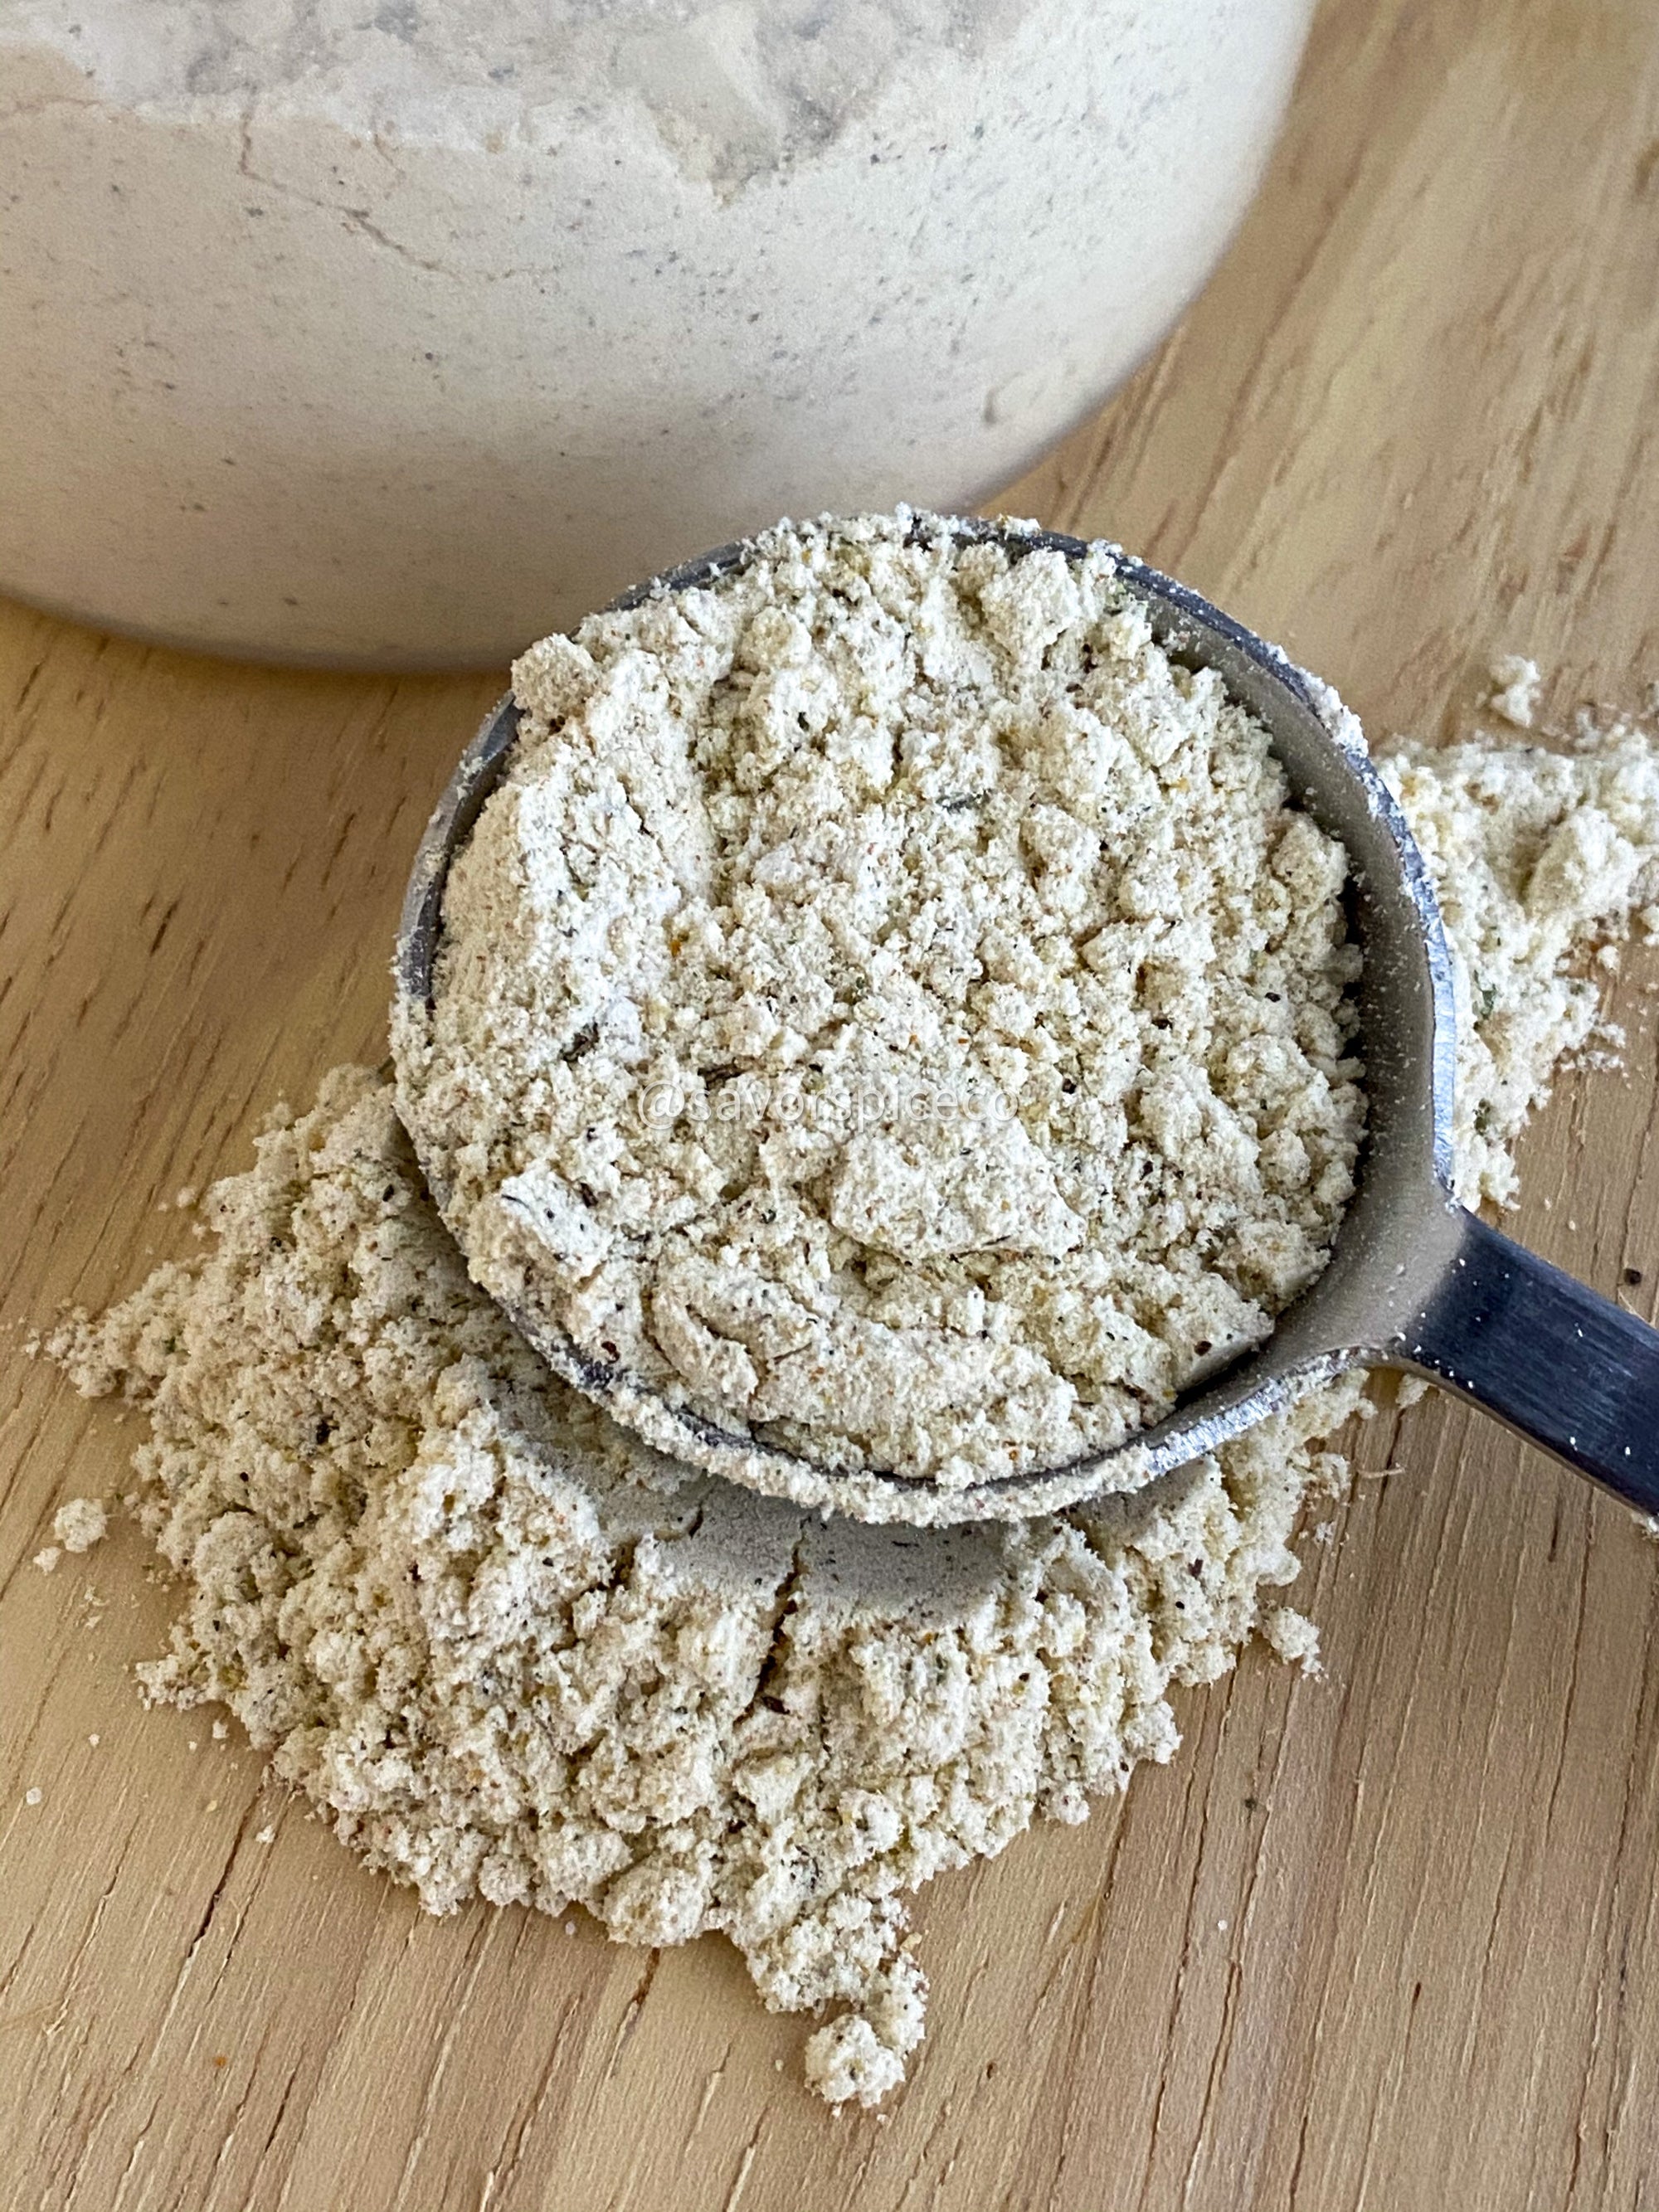 Scoop of yardbird seasoned flour